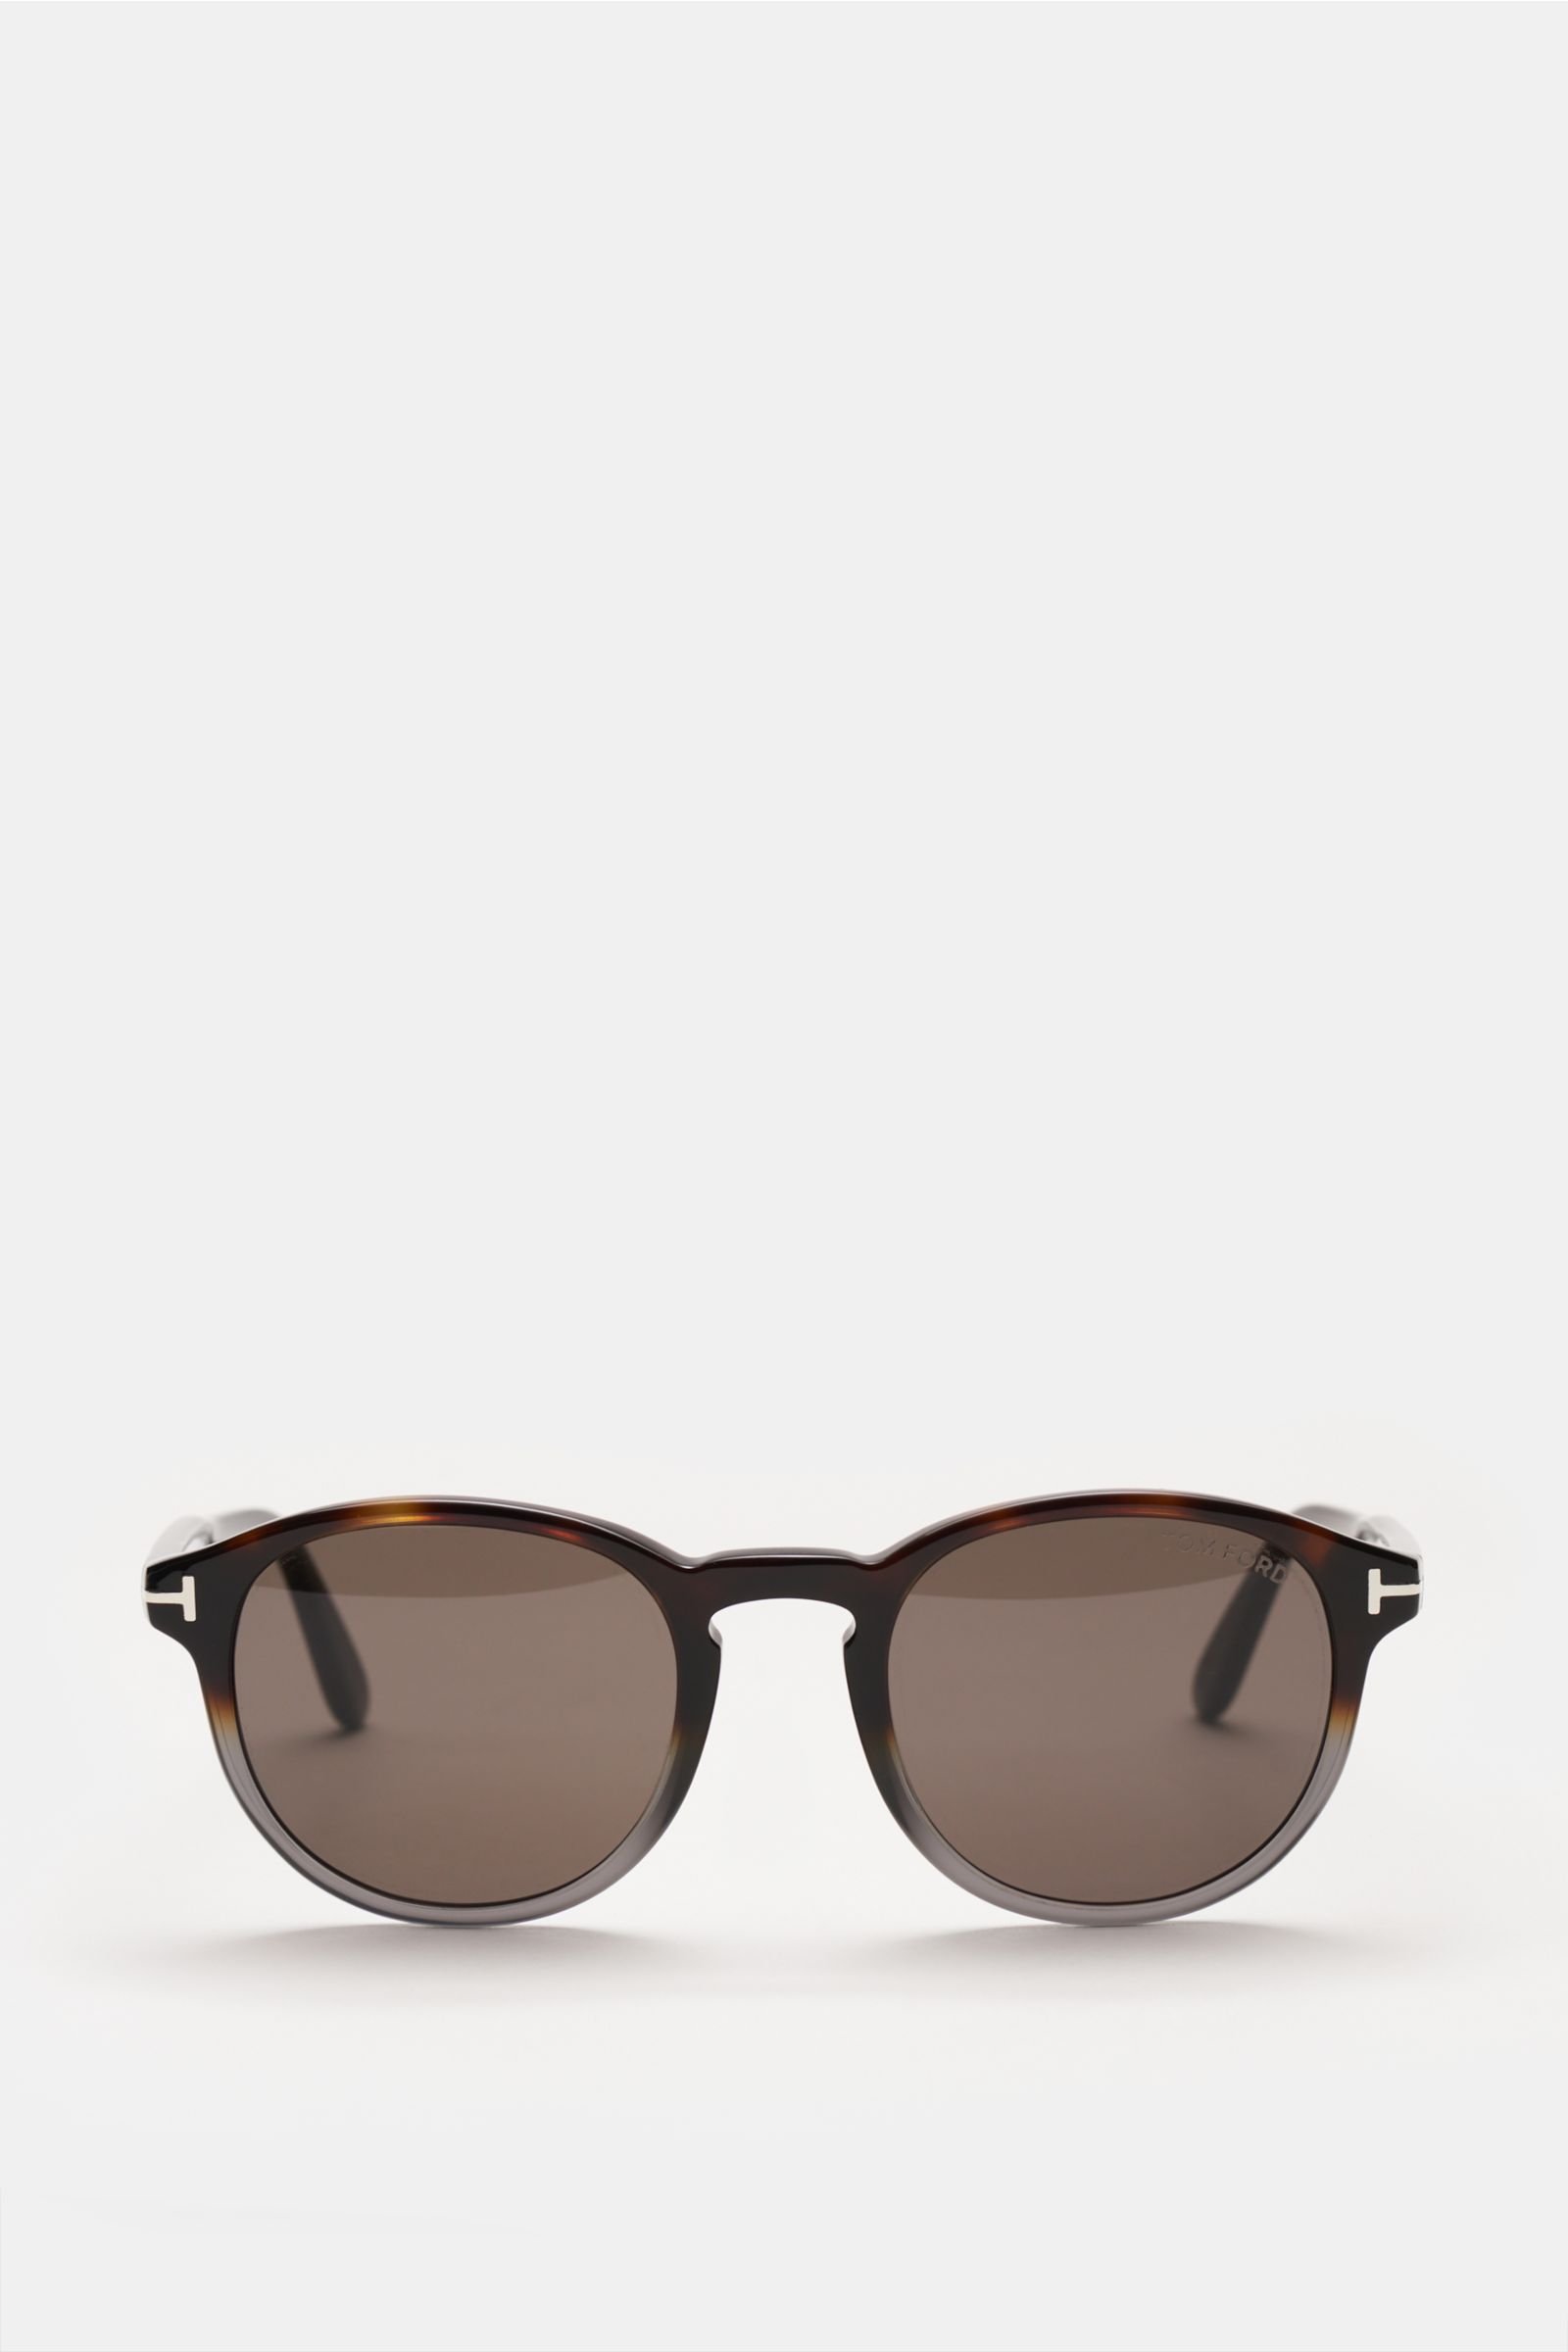 'Dante' sunglasses brown/light grey/grey